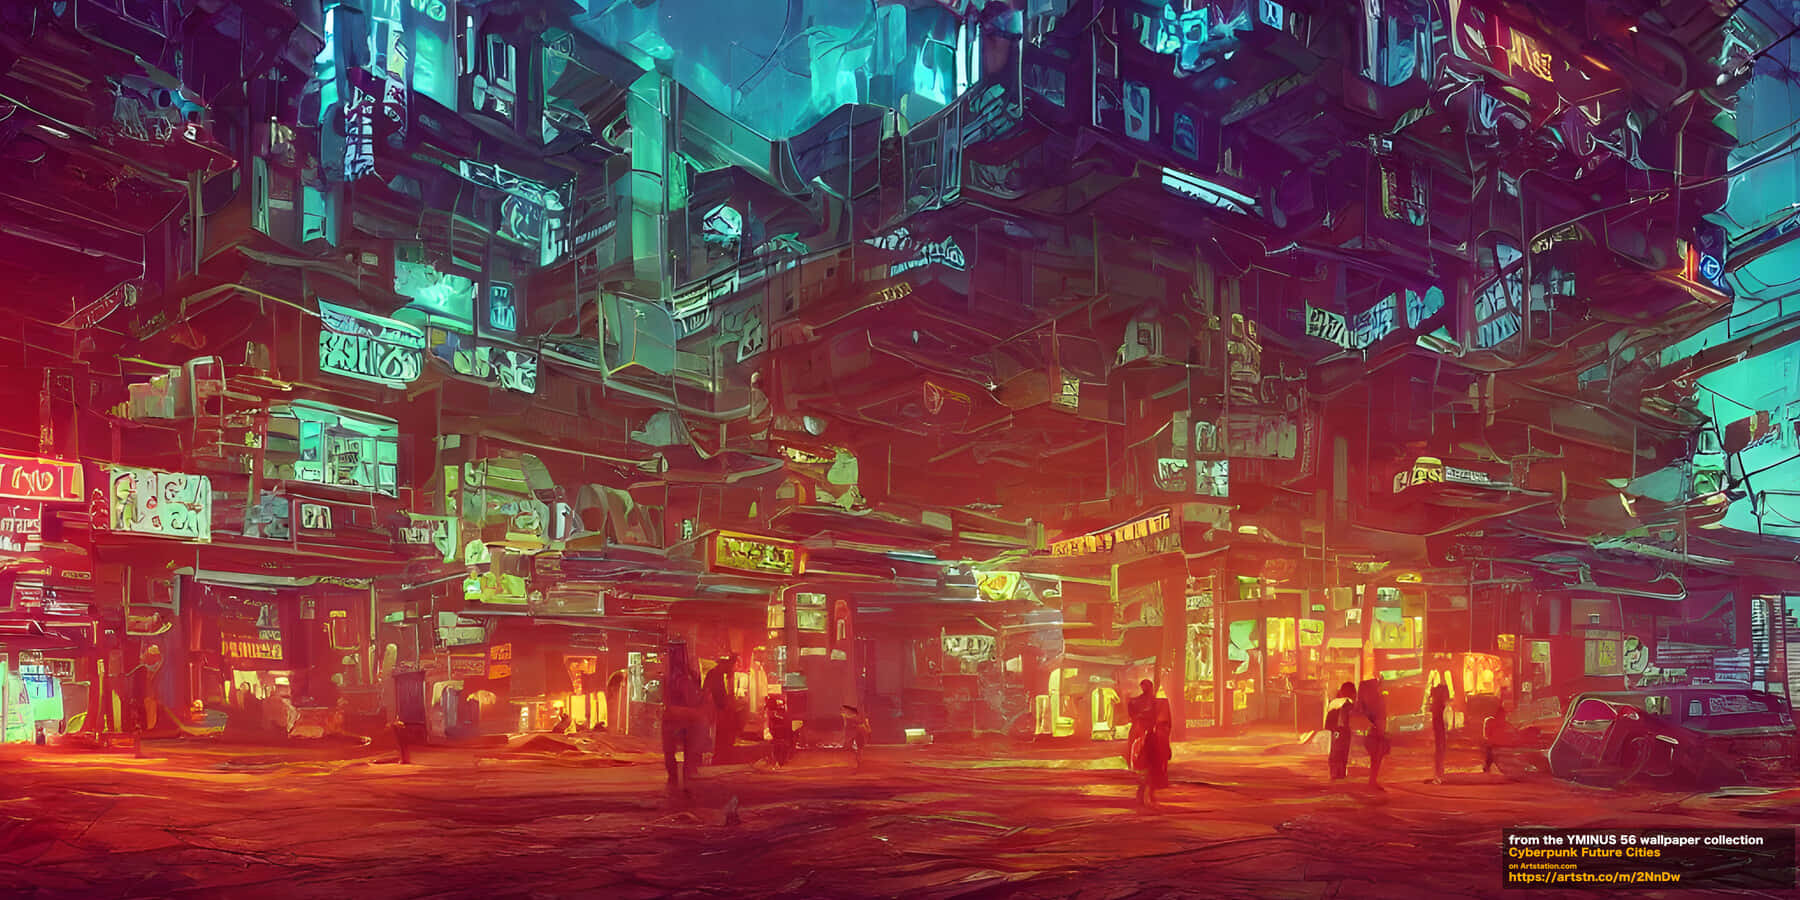 56 Wallpapers 4K Cyberpunk Future Cities